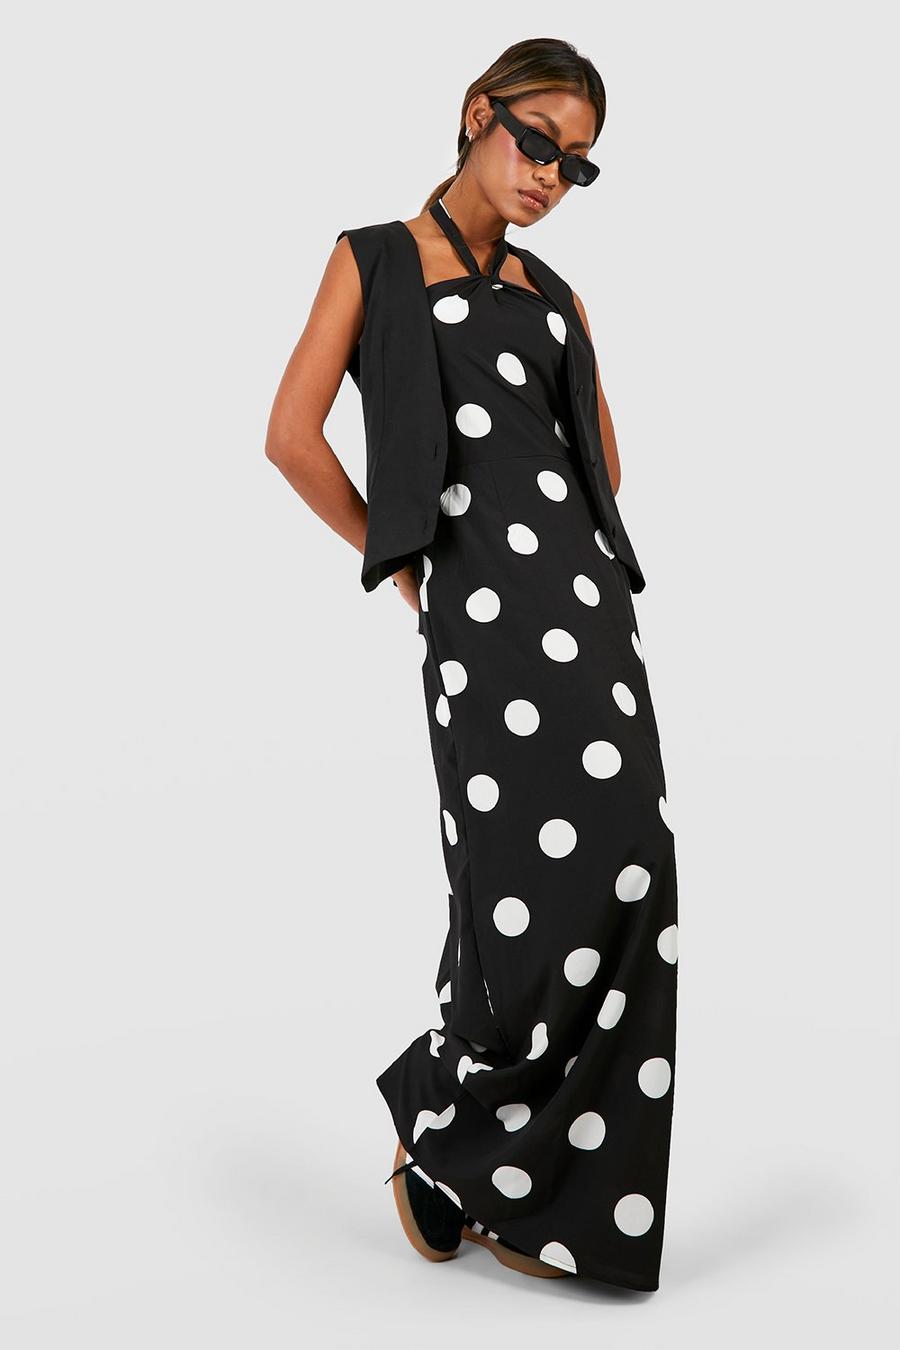 Black Polka Dot Maxi Identity Dress